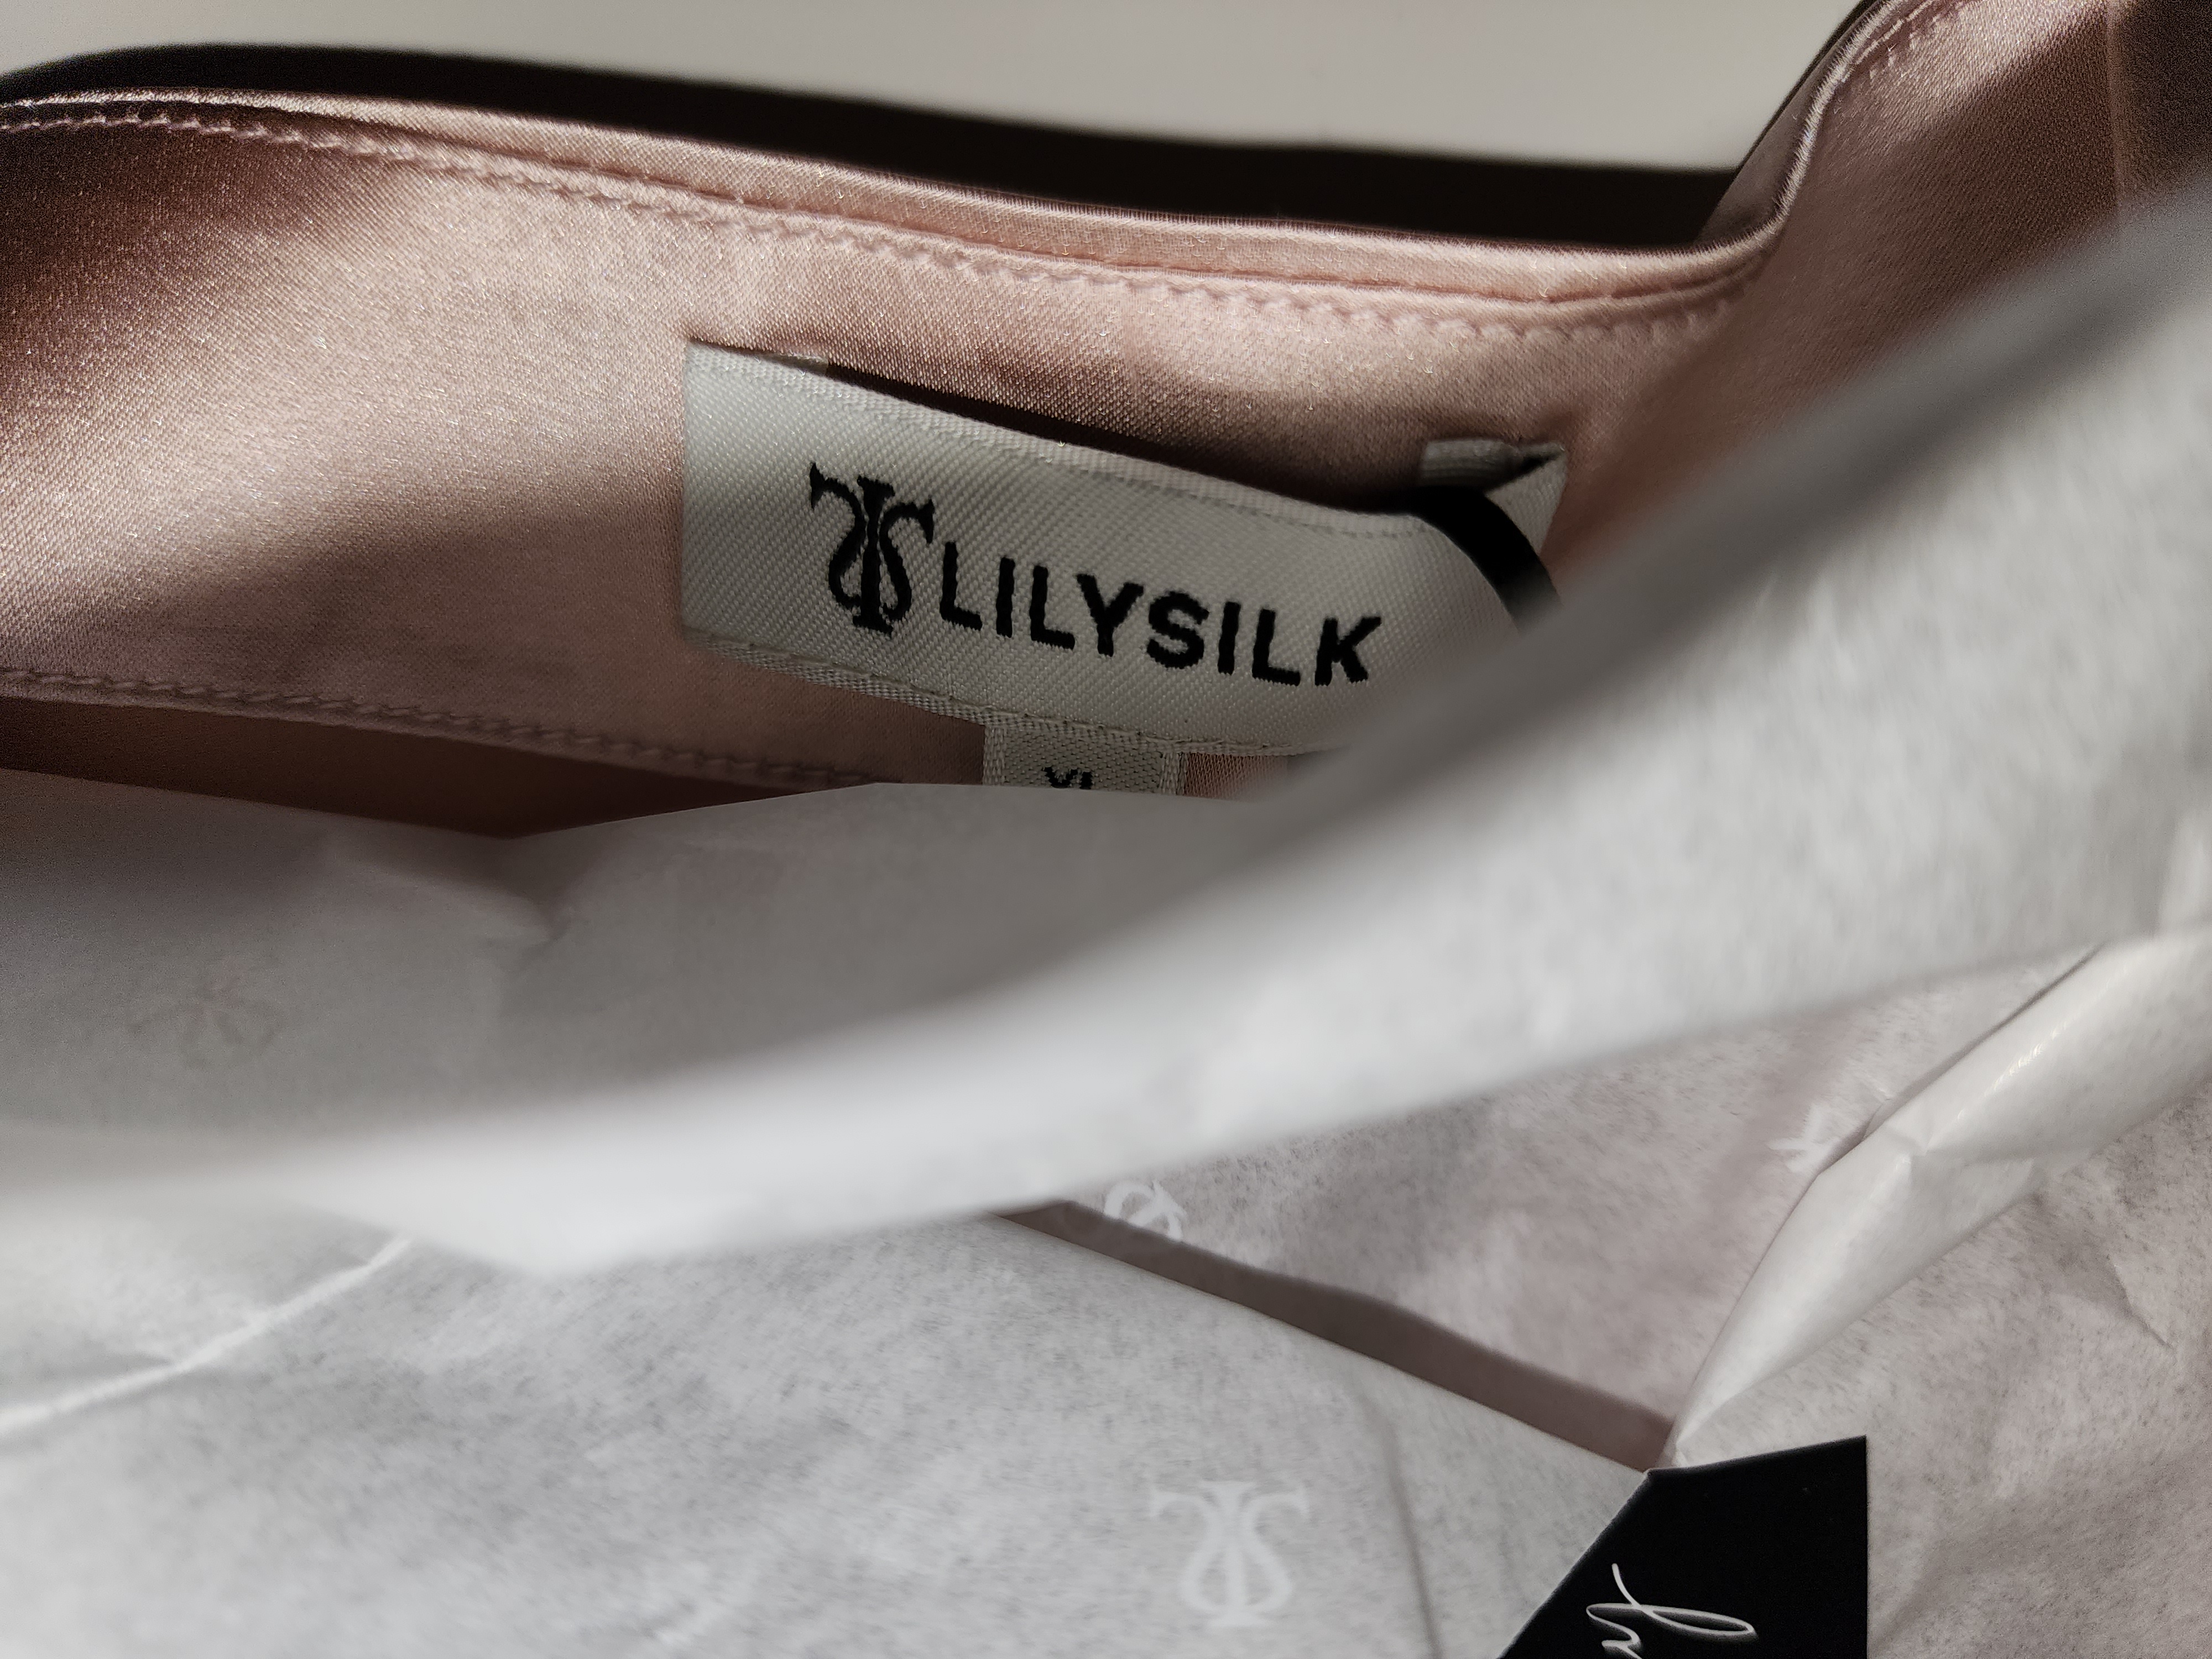 Lilysilk Review [2023]: Legit Luxury or Scam?